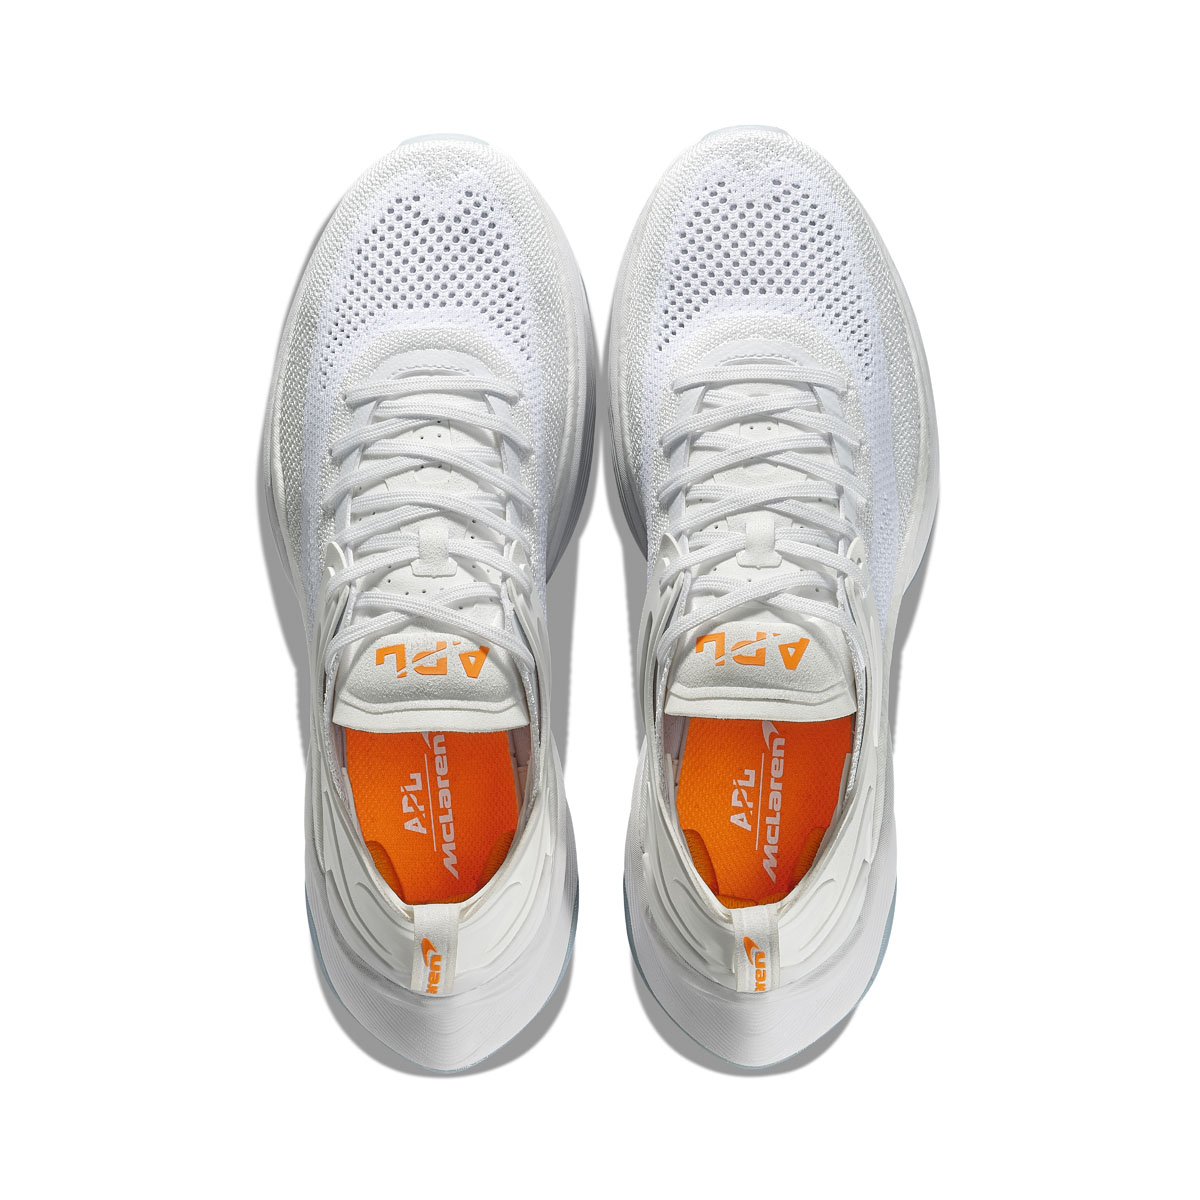 apl mclaren hyspeed shoe in white and orange